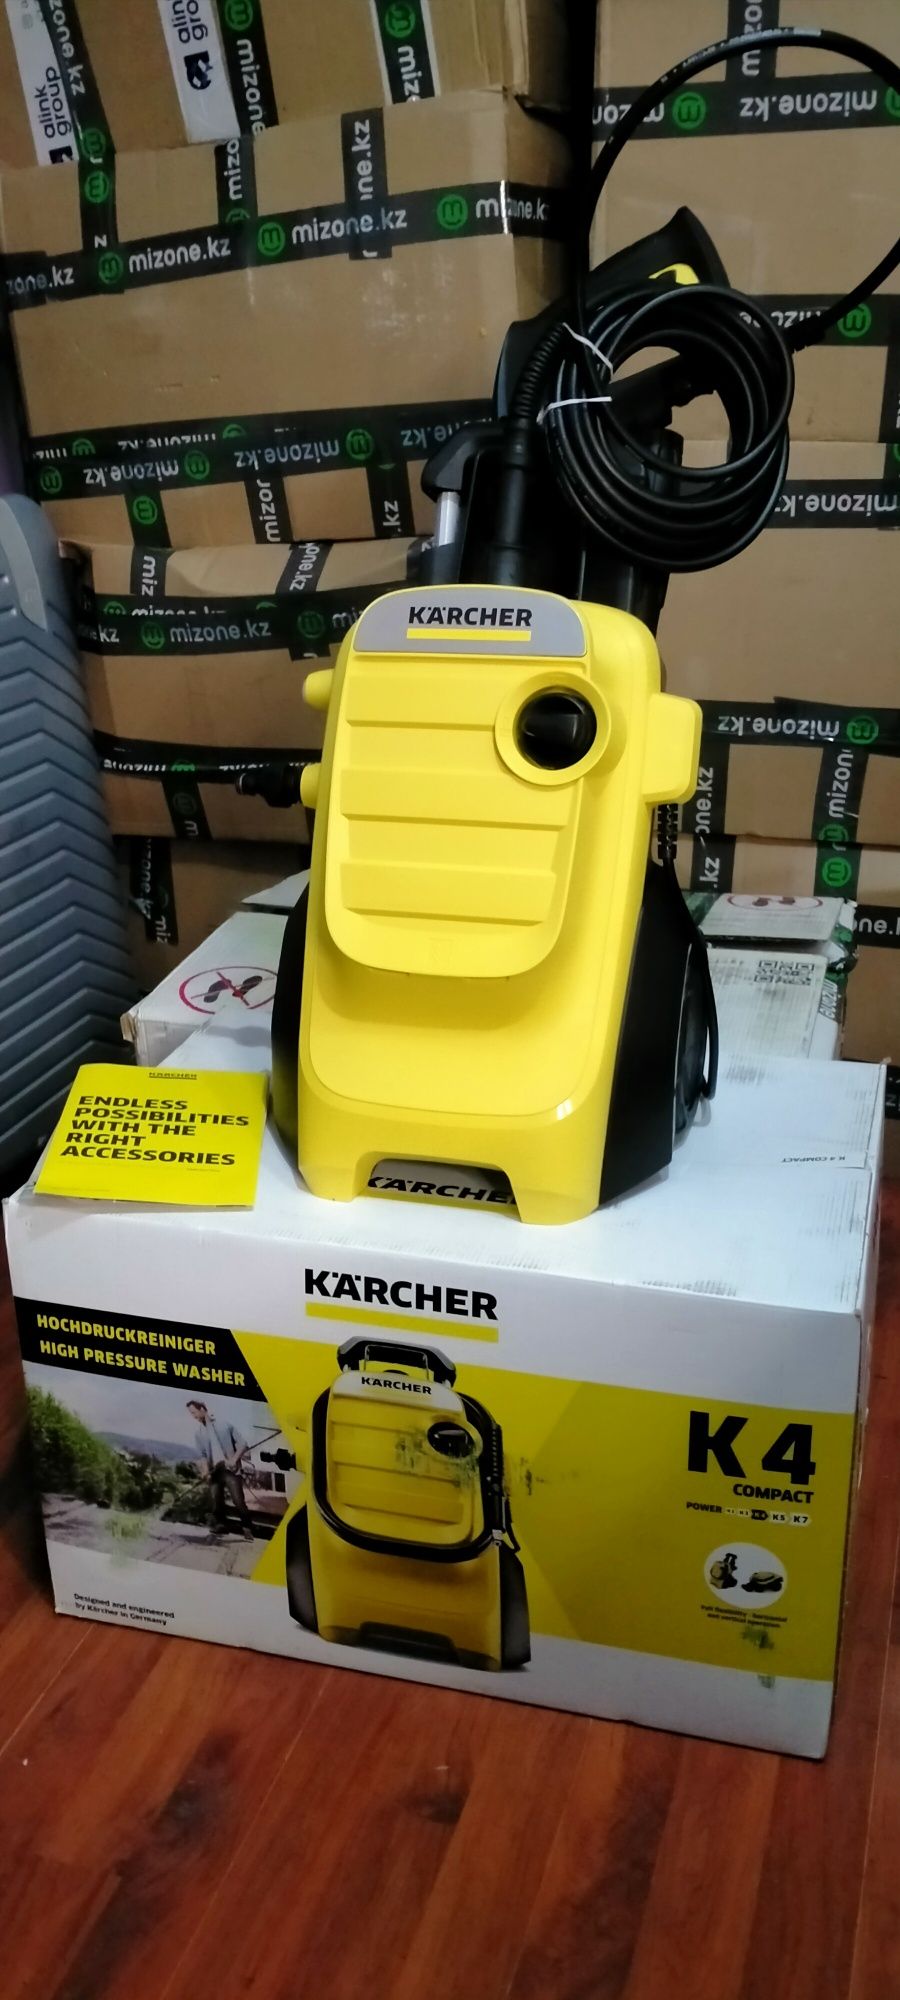 Karcher k 4 новый в коробке